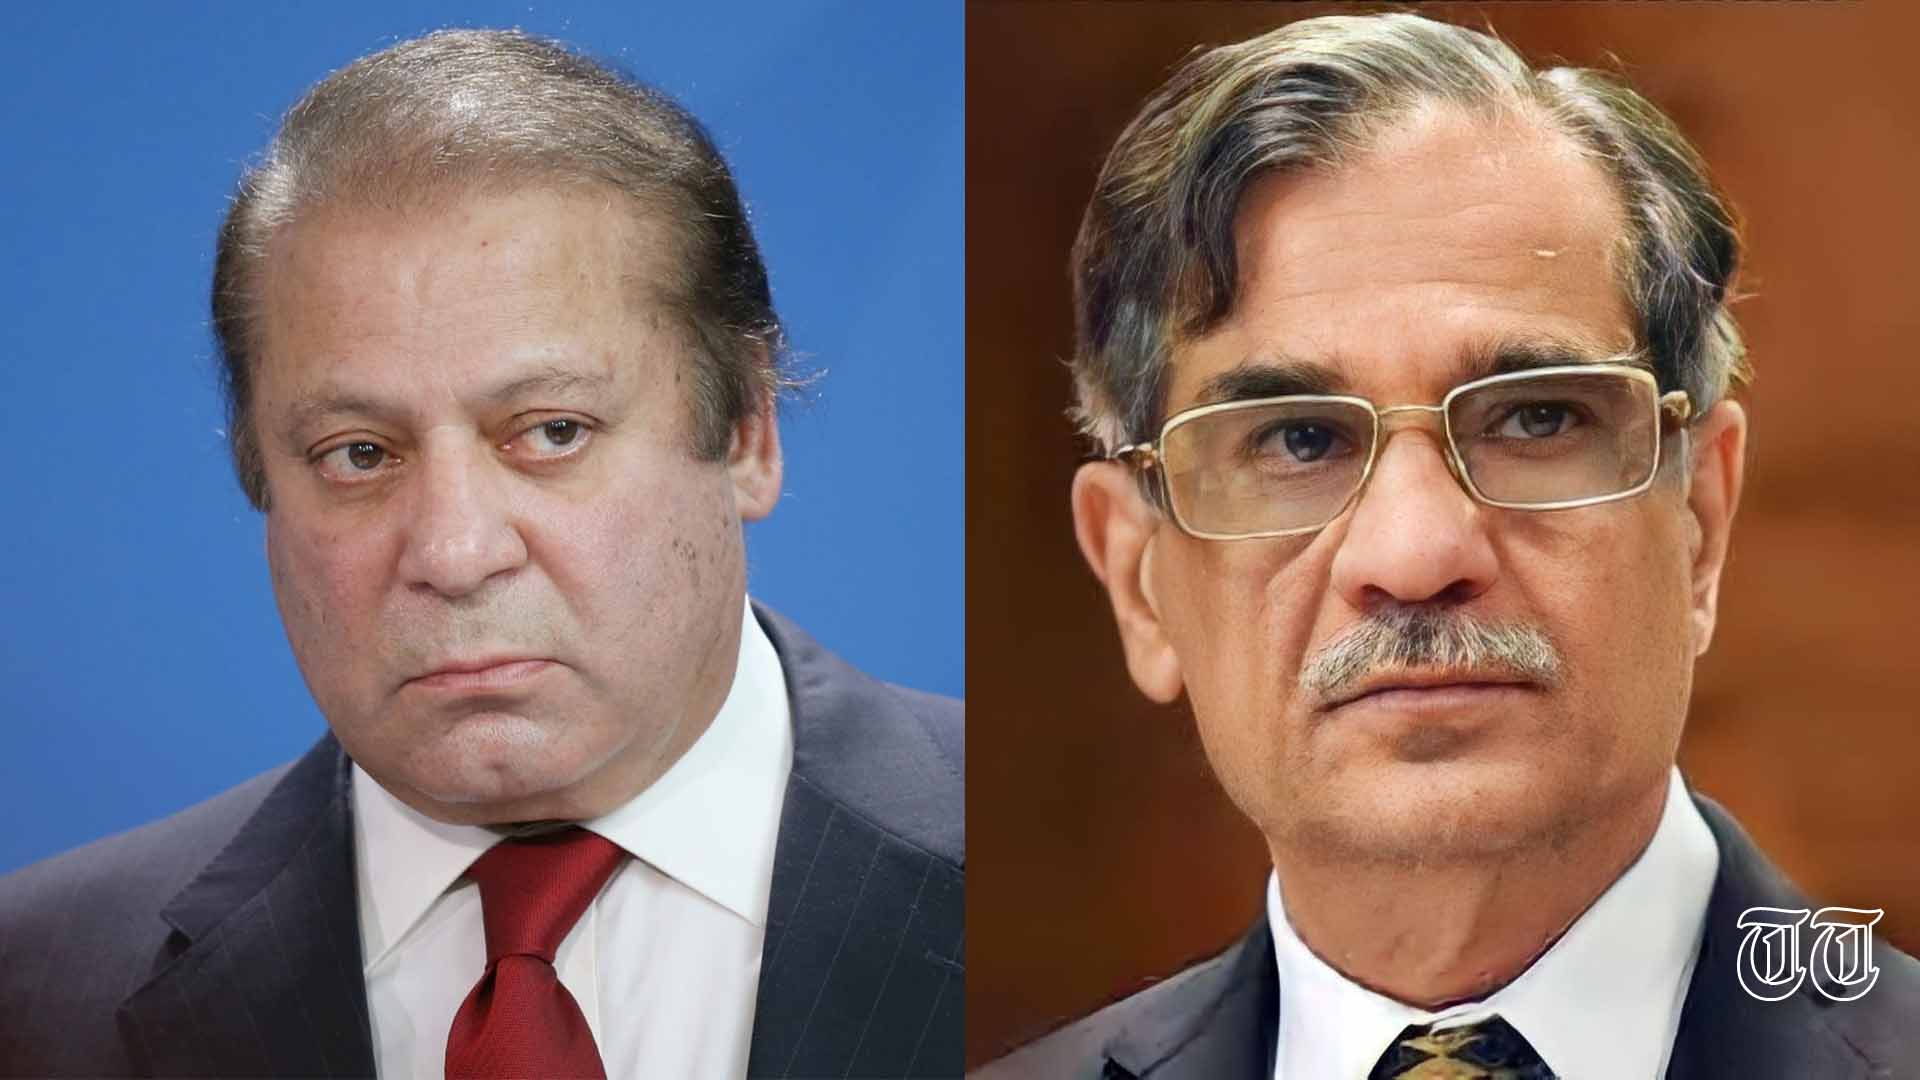 PML(N) chief Nawaz Sharif (L) and former Chief Justice of Pakistan Saqib Nisar are shown. — FILE